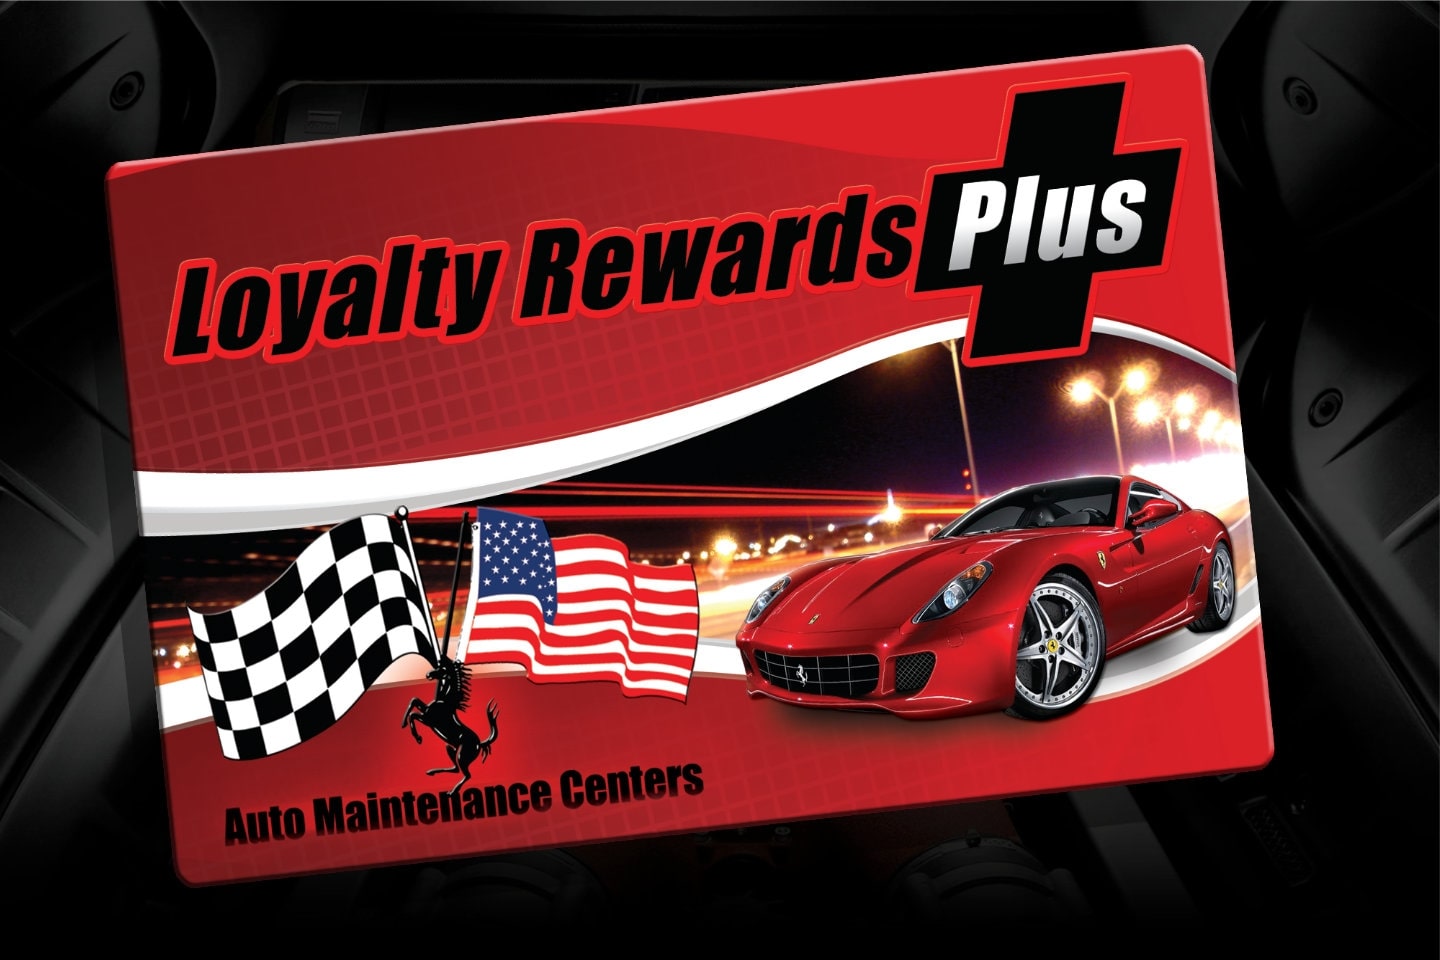 Loyalty rewards plus program 